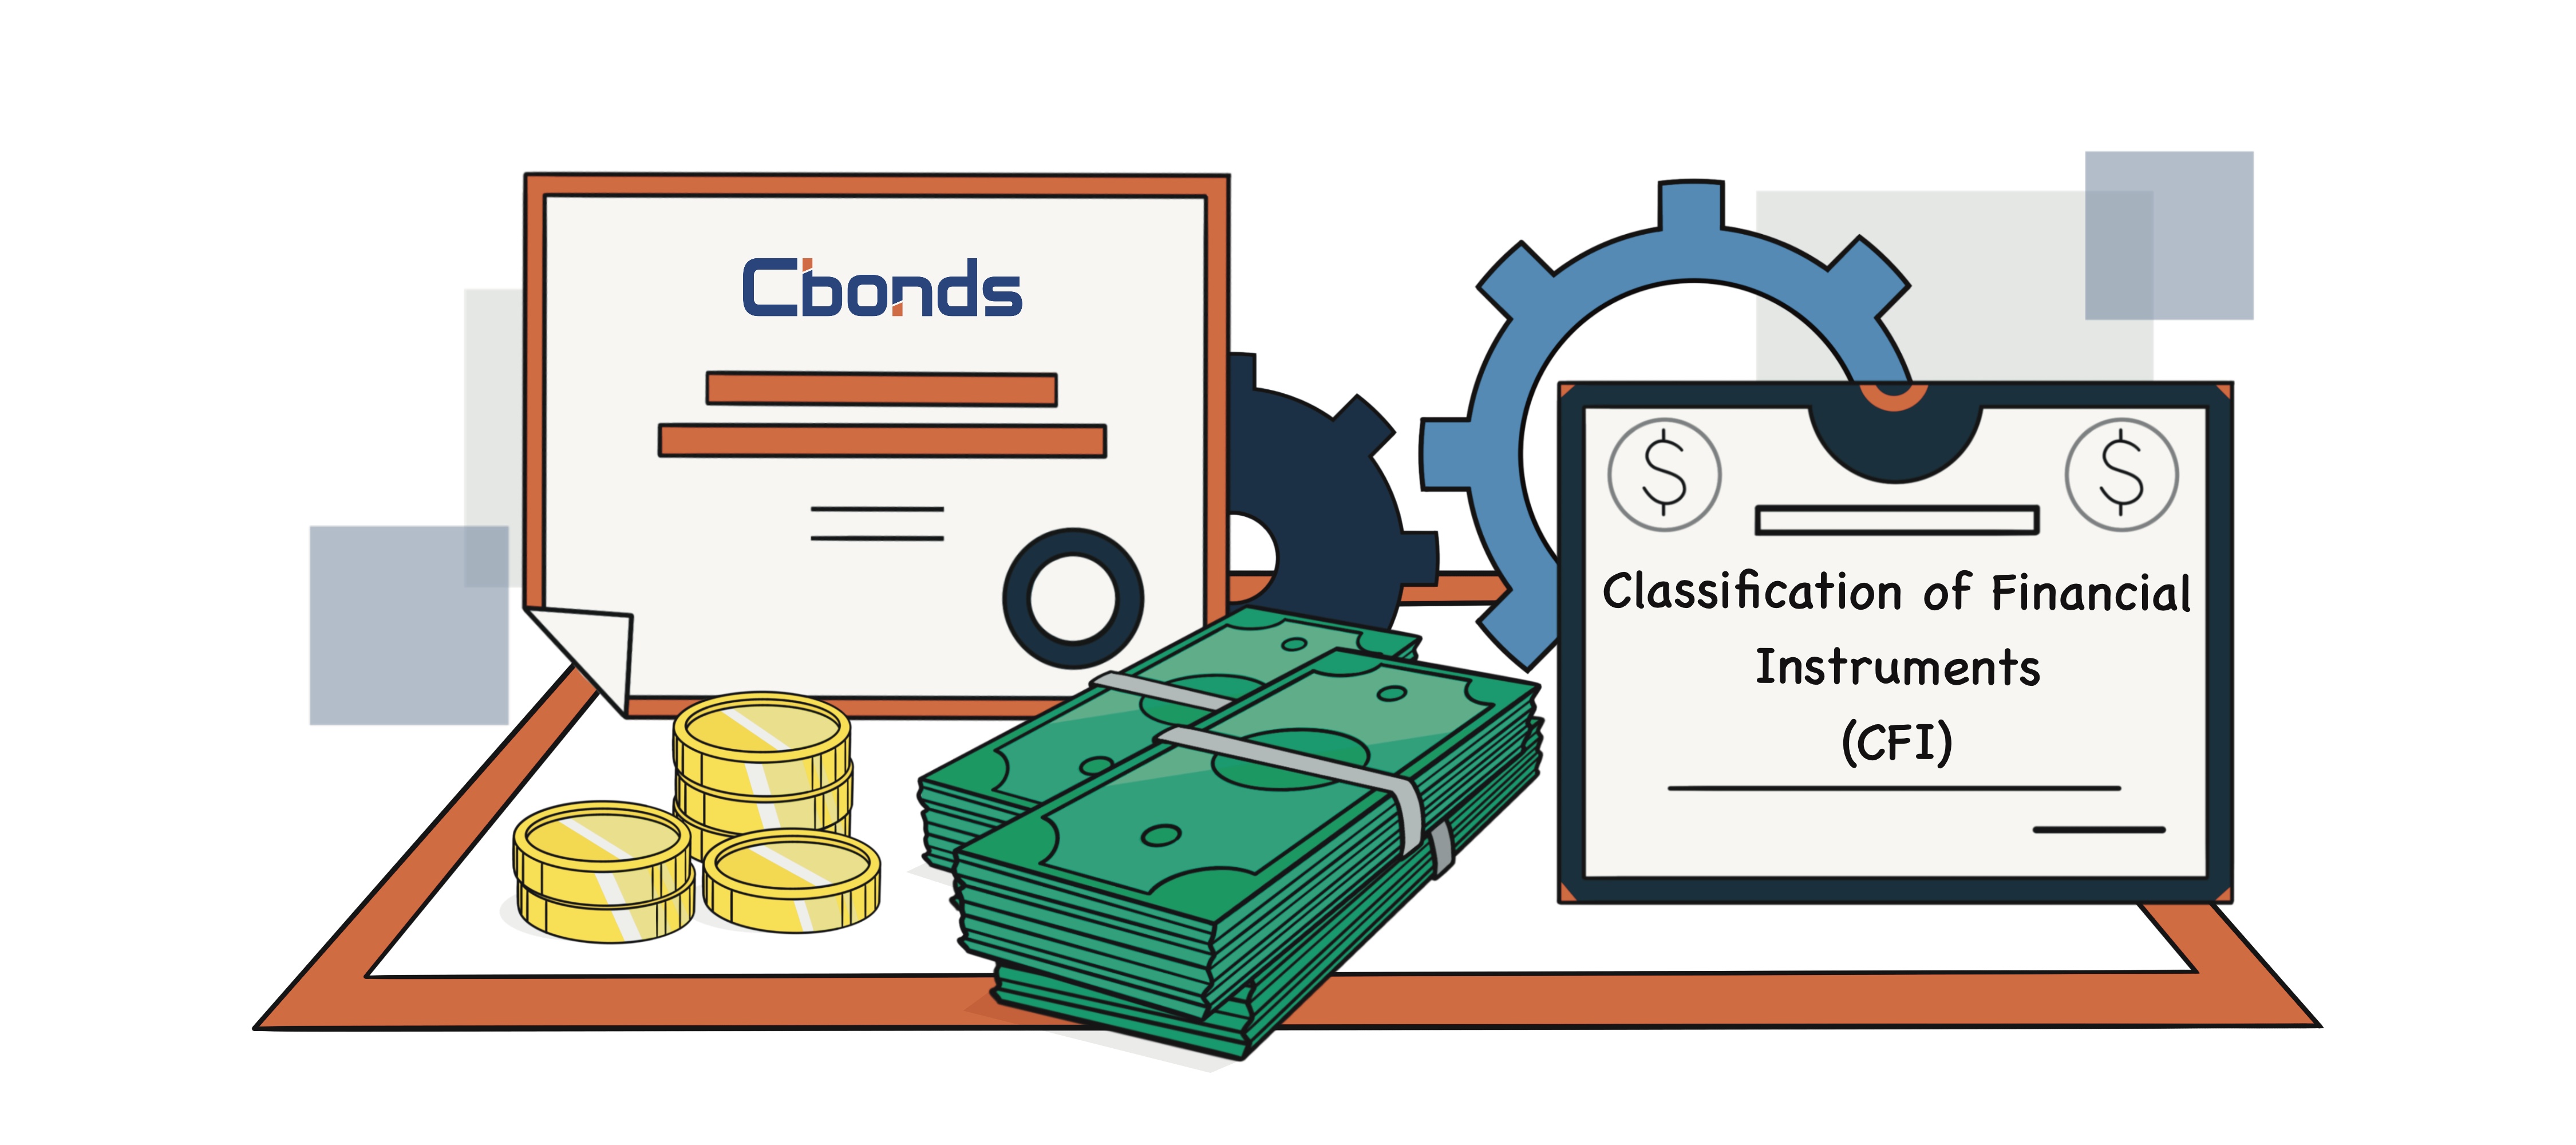 Classification of Financial Instruments (CFI)